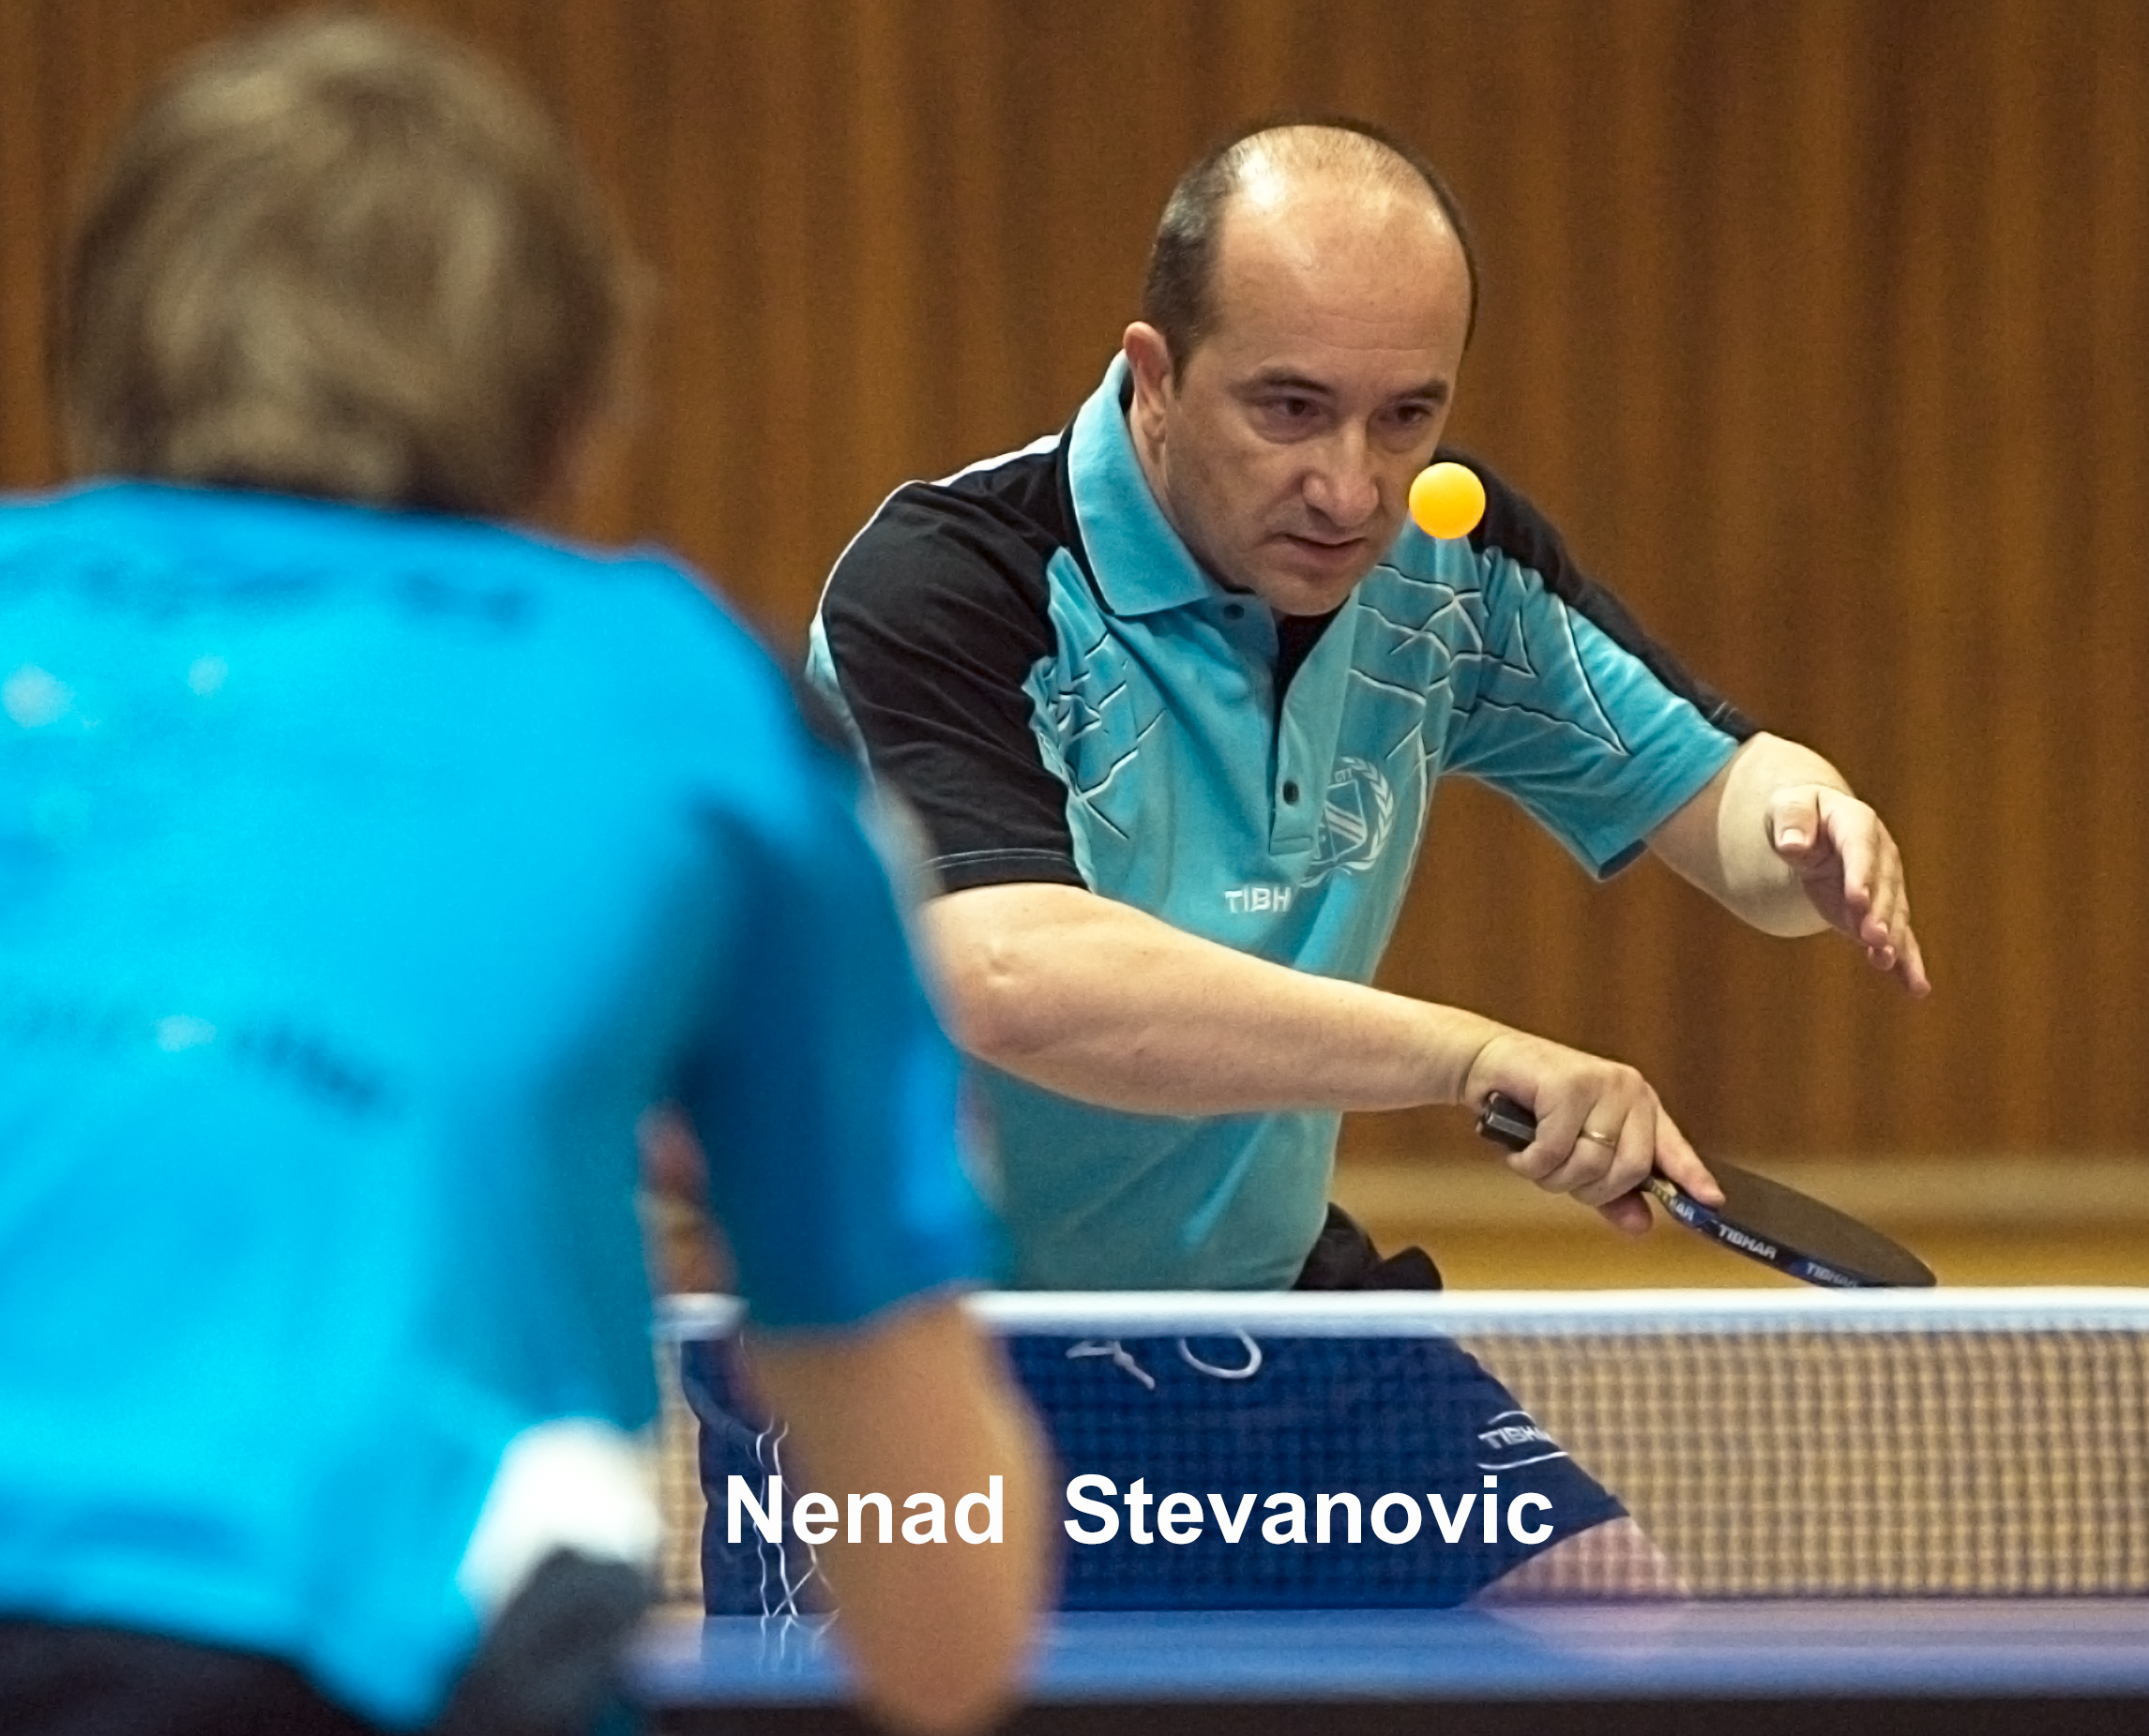 Nenad Stevanovic